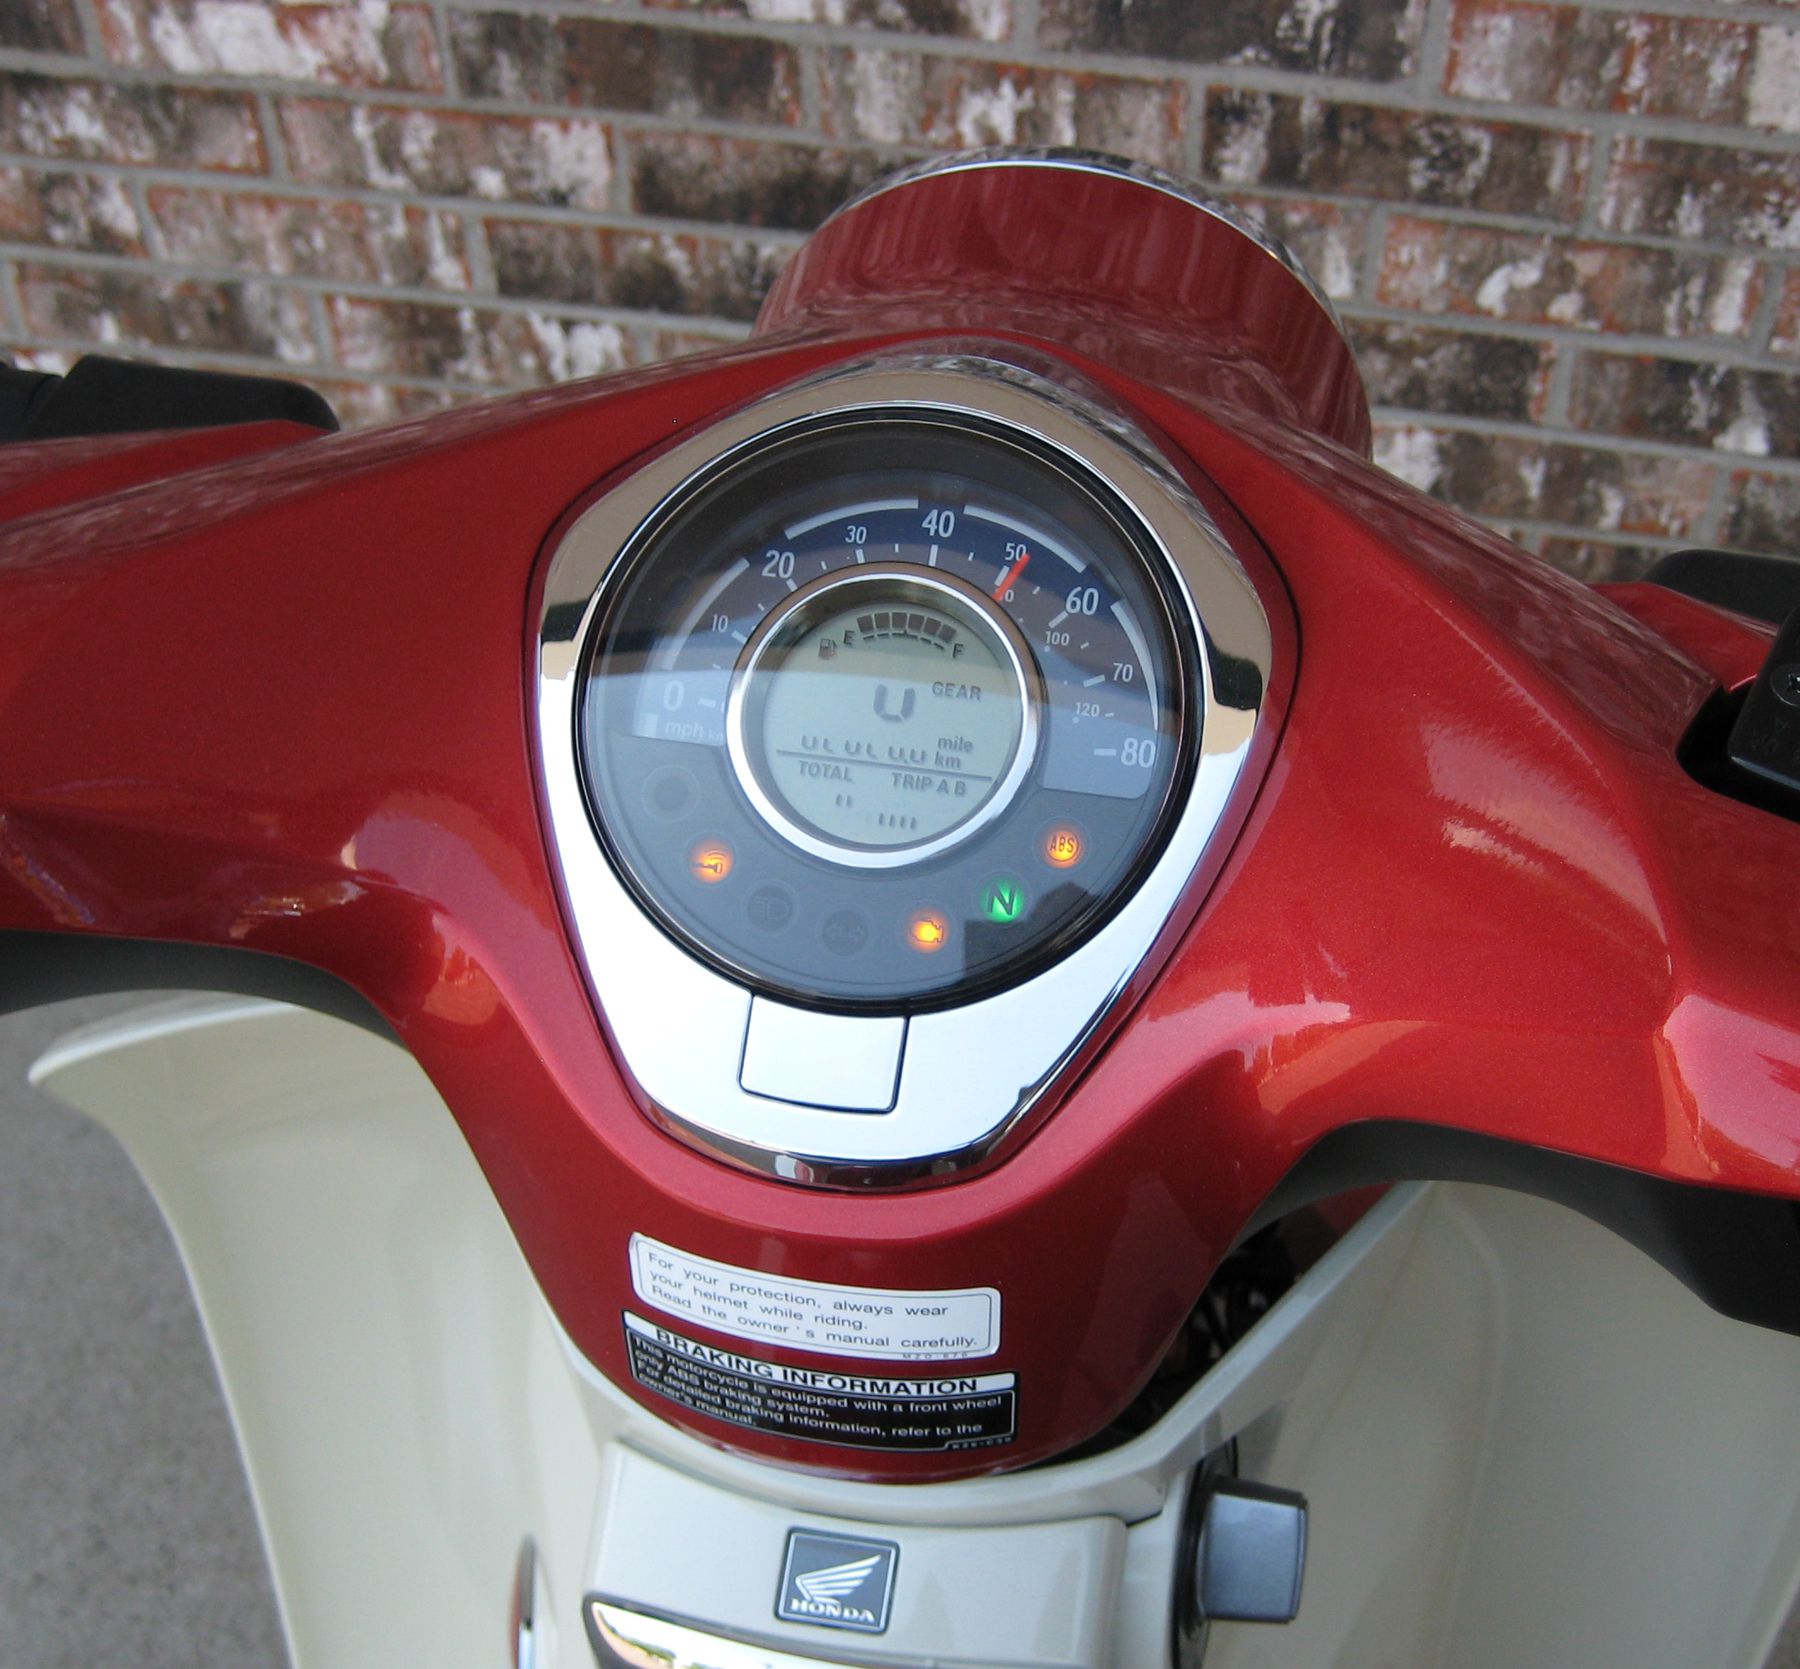 Closeup of dash cluster showing speed gauge